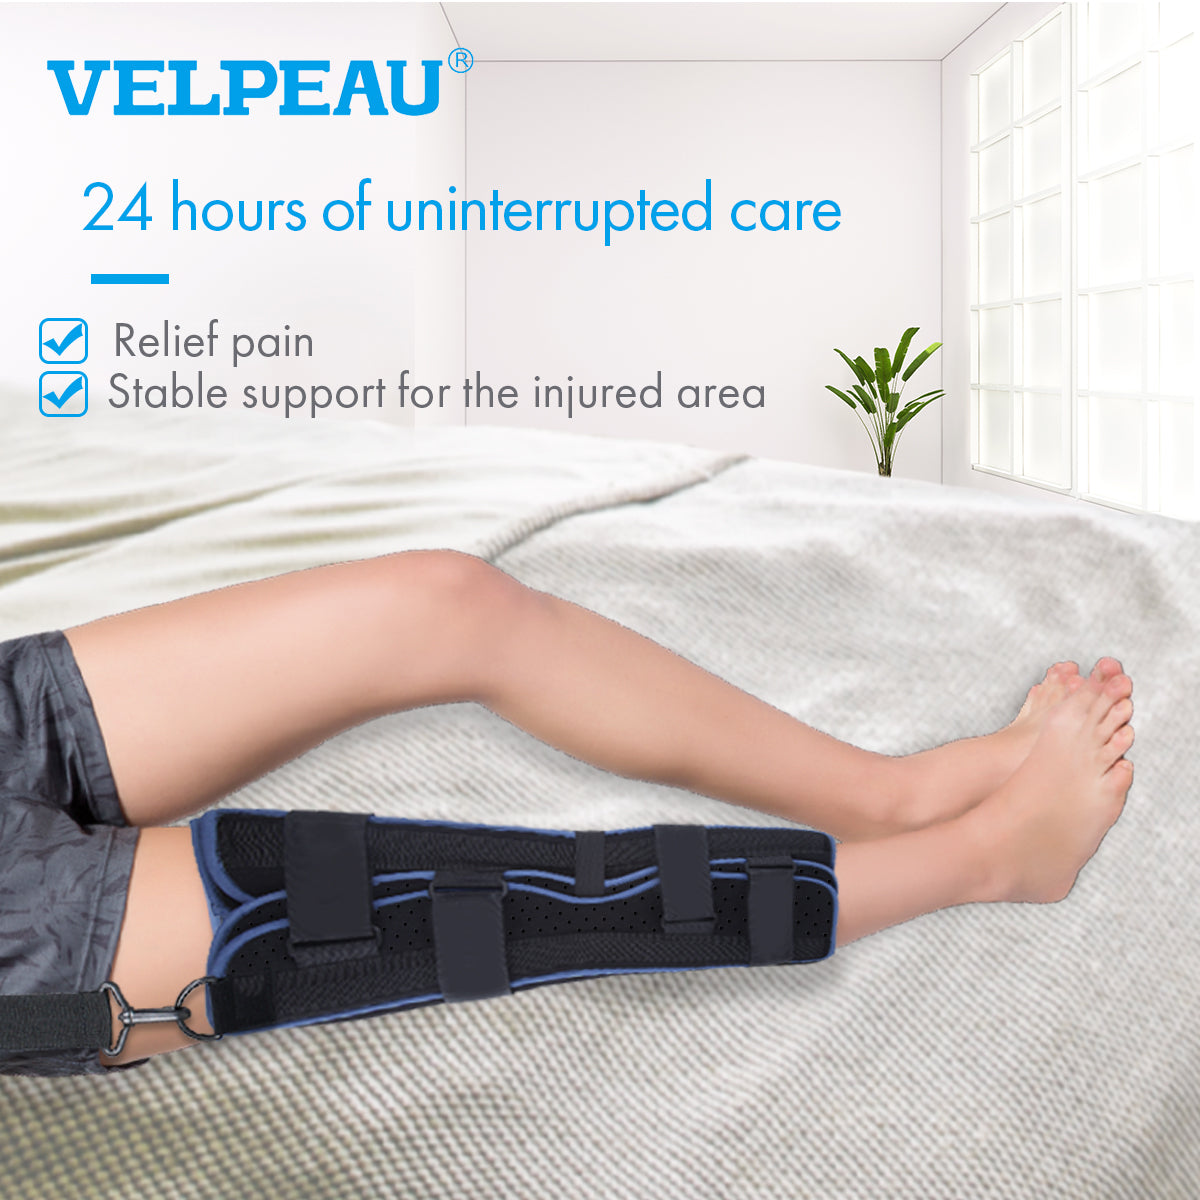 VP1202 VELPEAU Tri-Panel Knee Immobilizer Brace